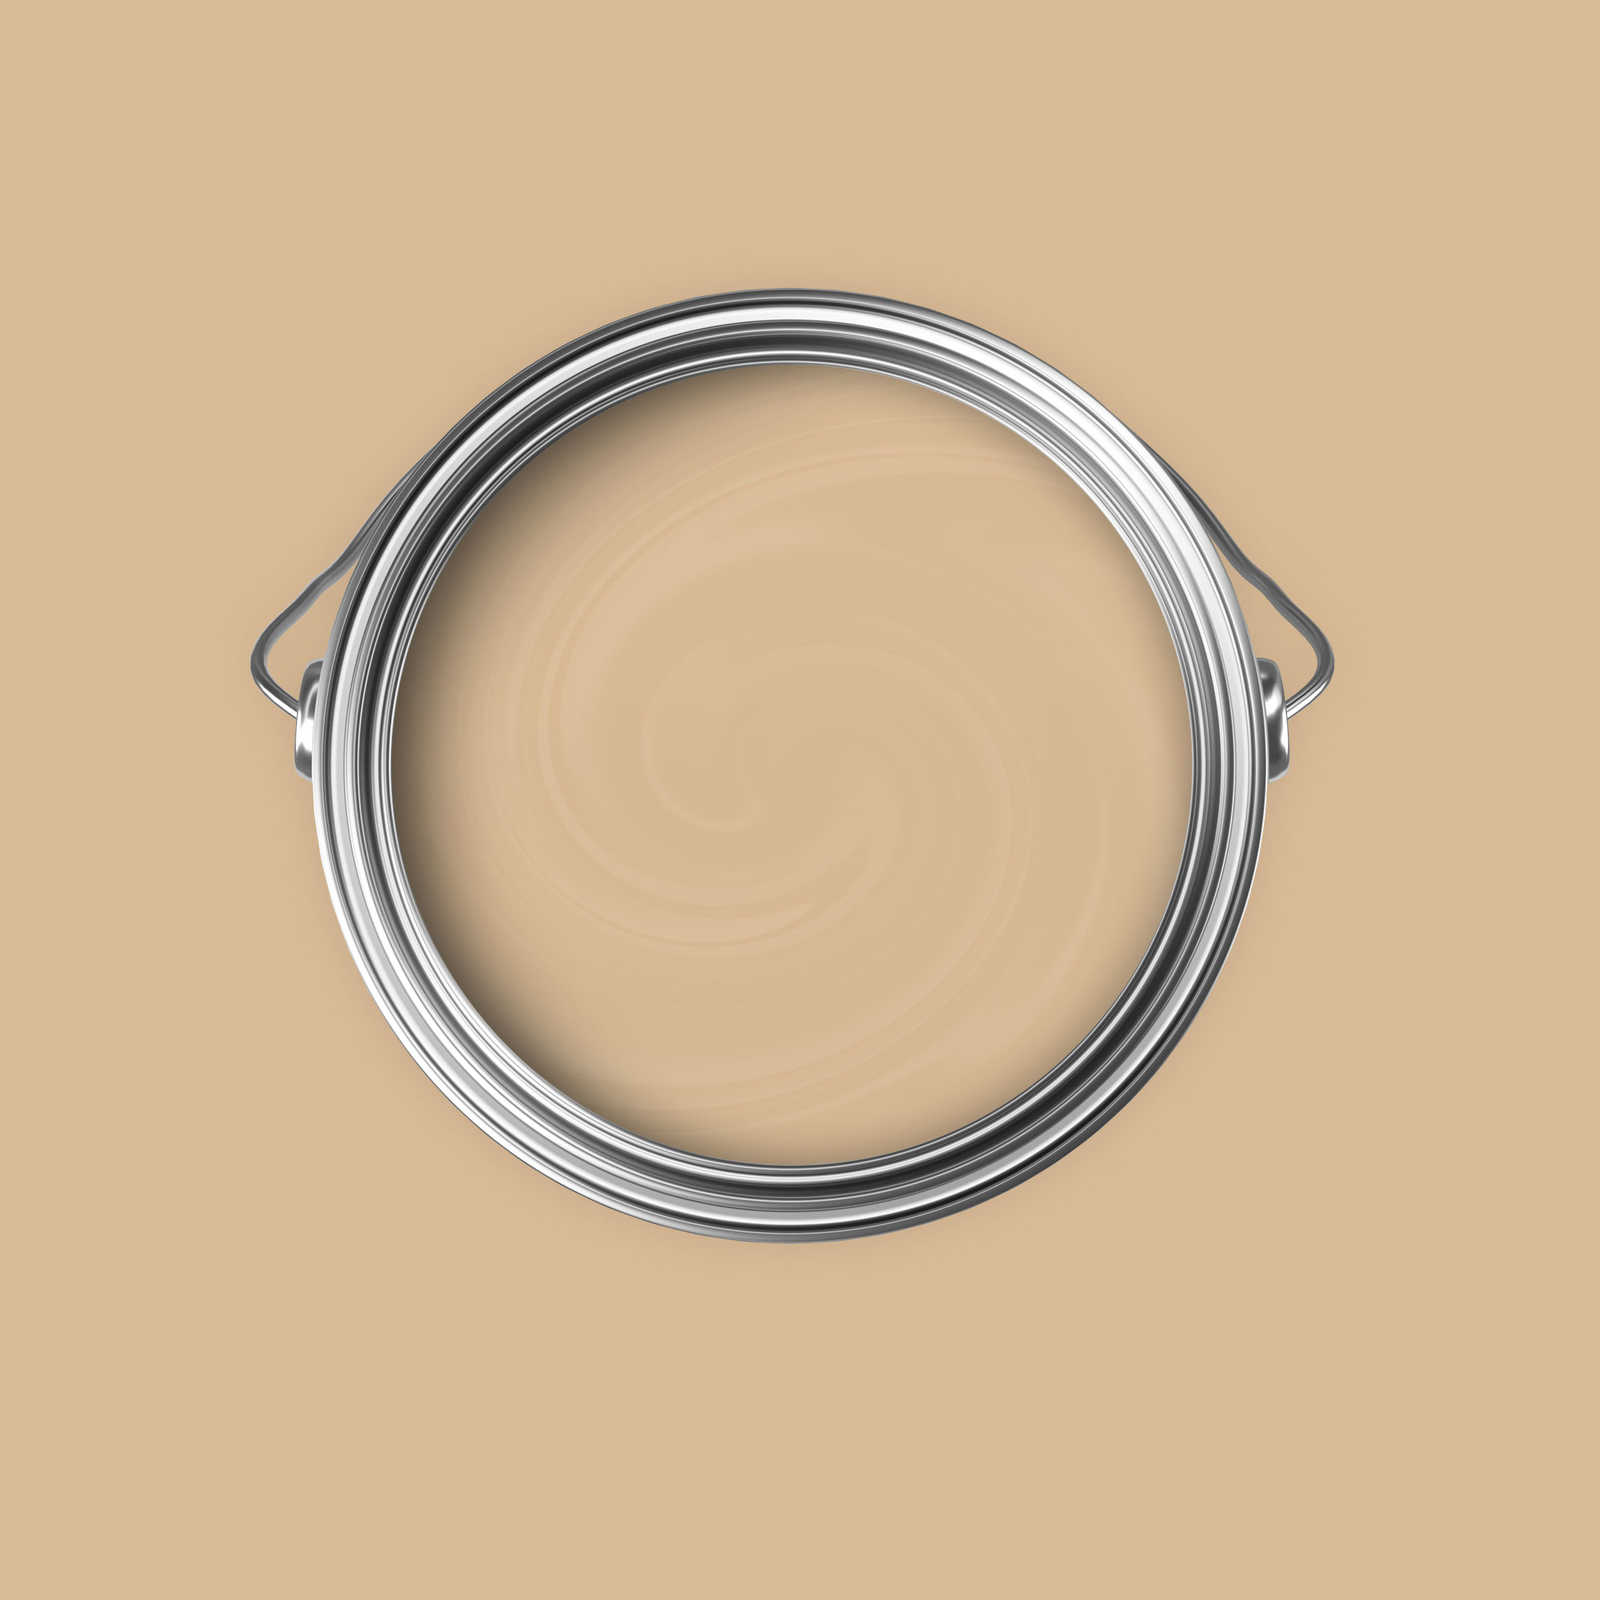             Premium Wall Paint serene cappuccino »Boho Beige« NW725 – 5 litre
        